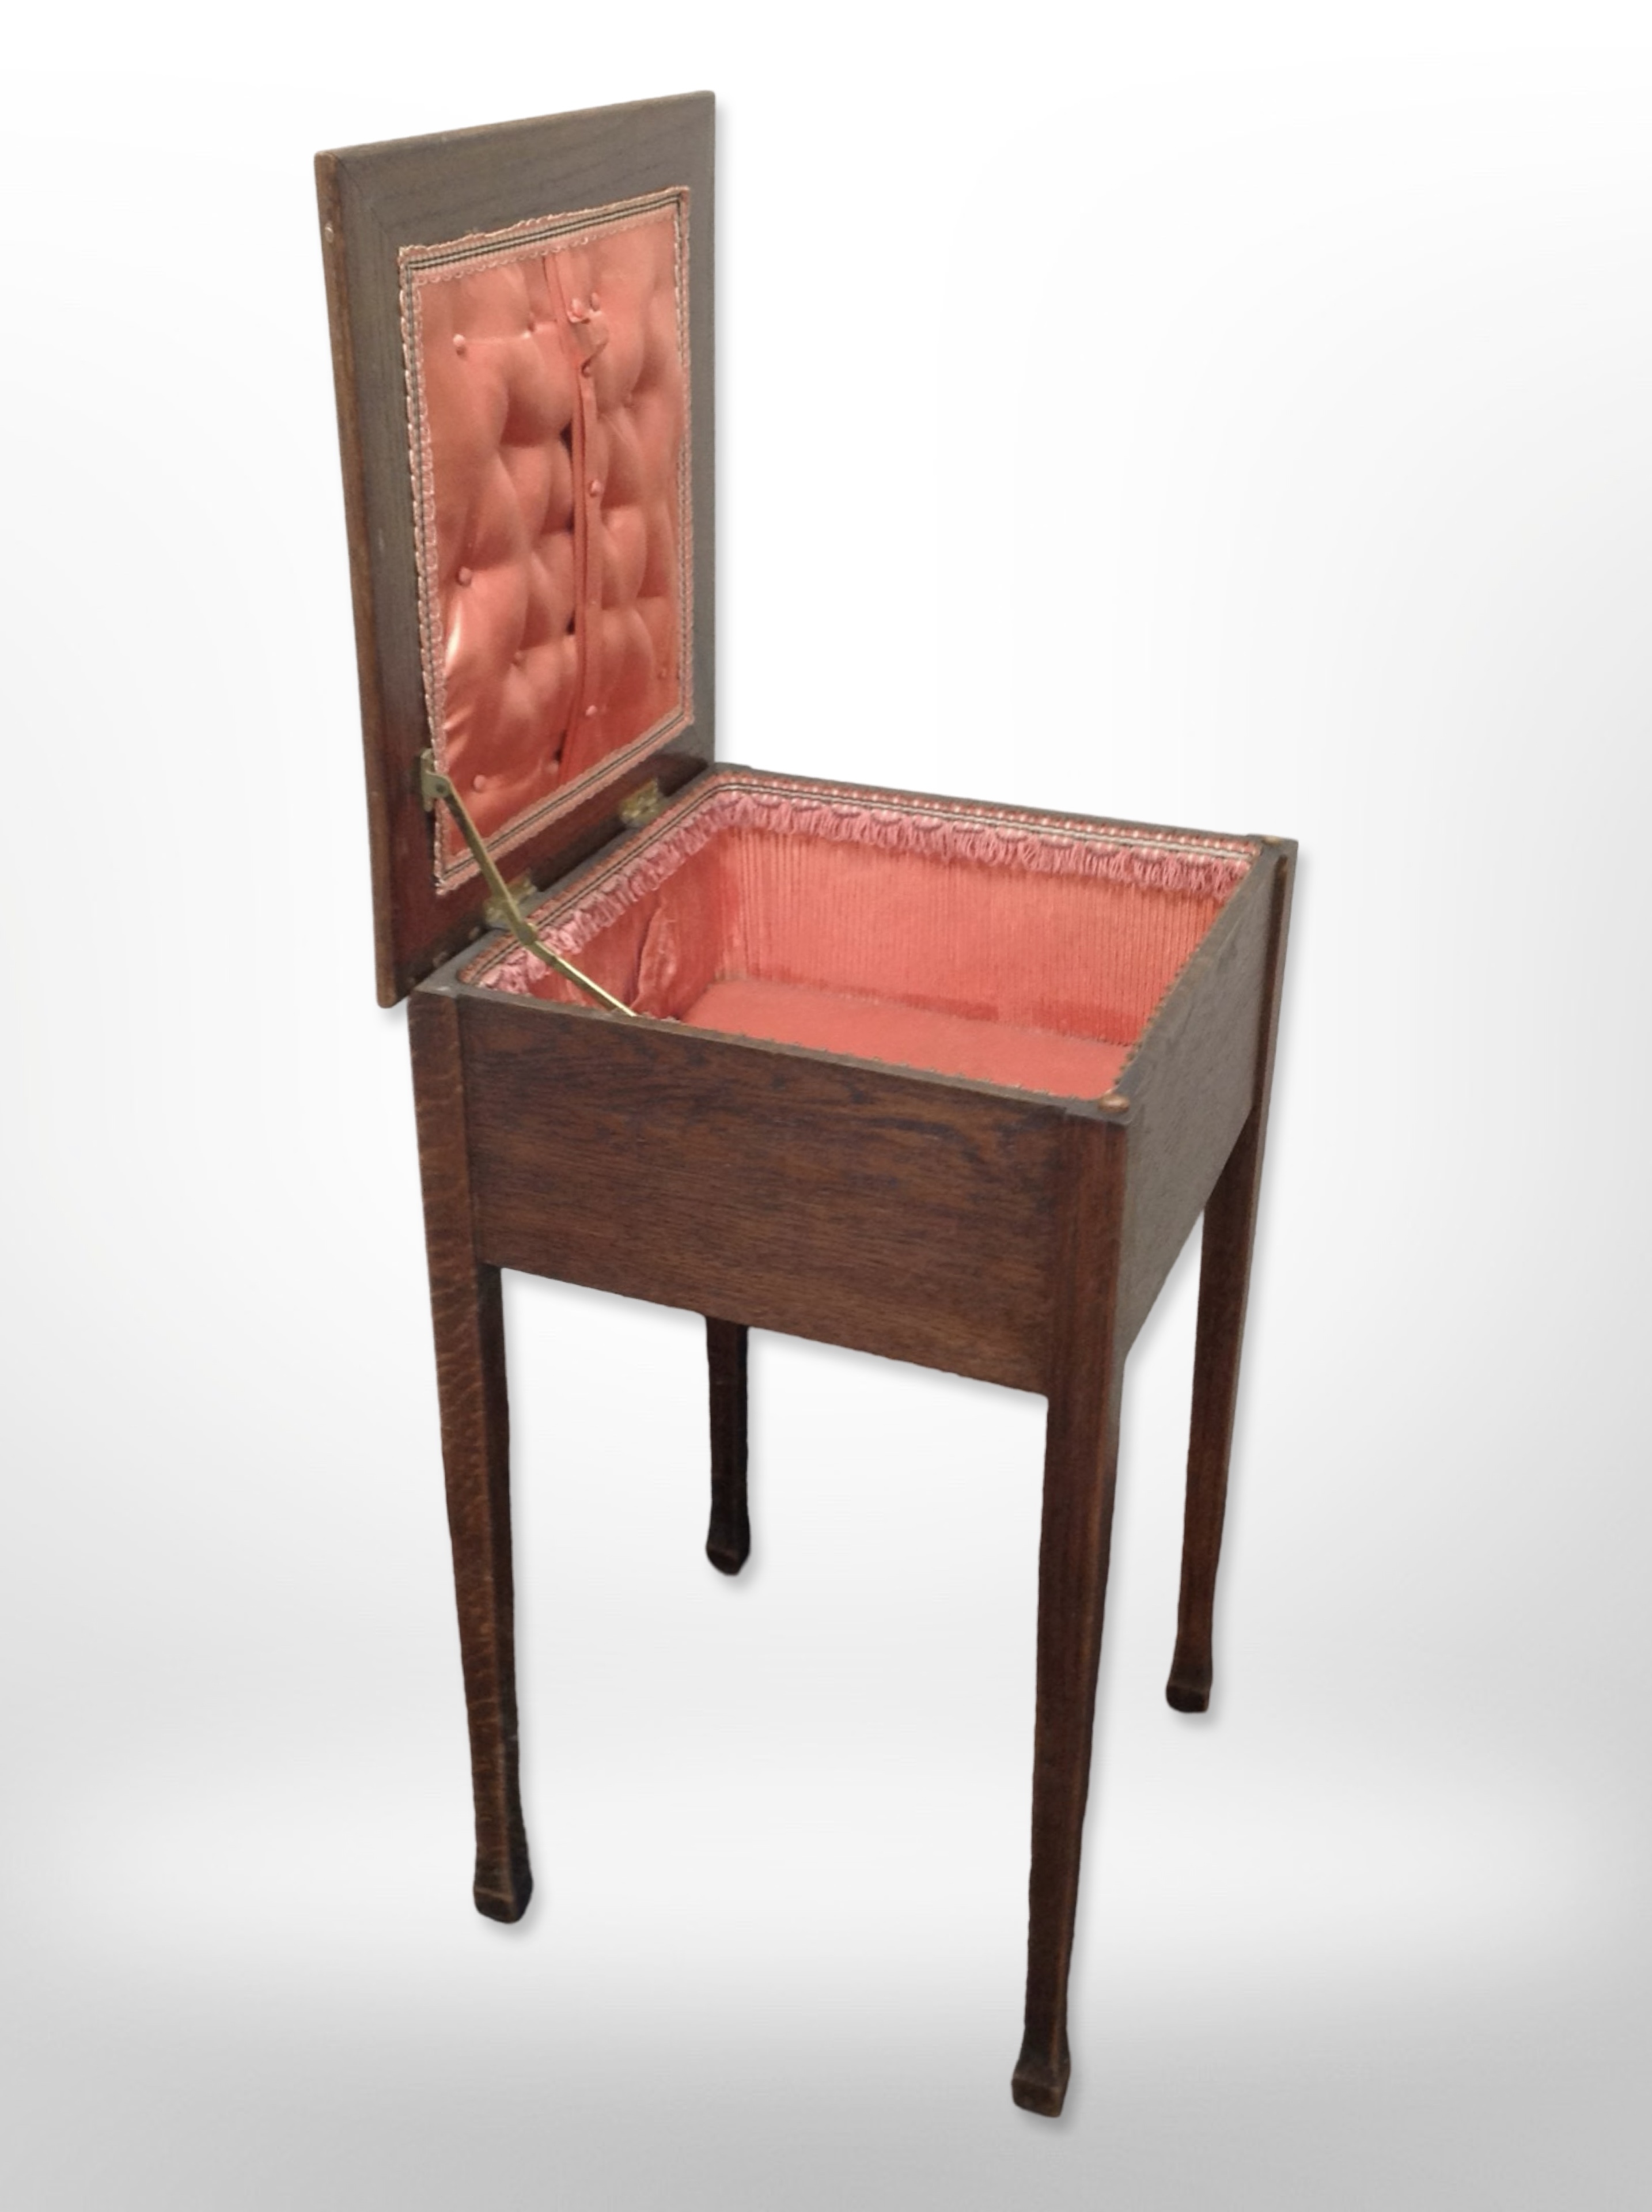 An early 20th century oak sewing box,